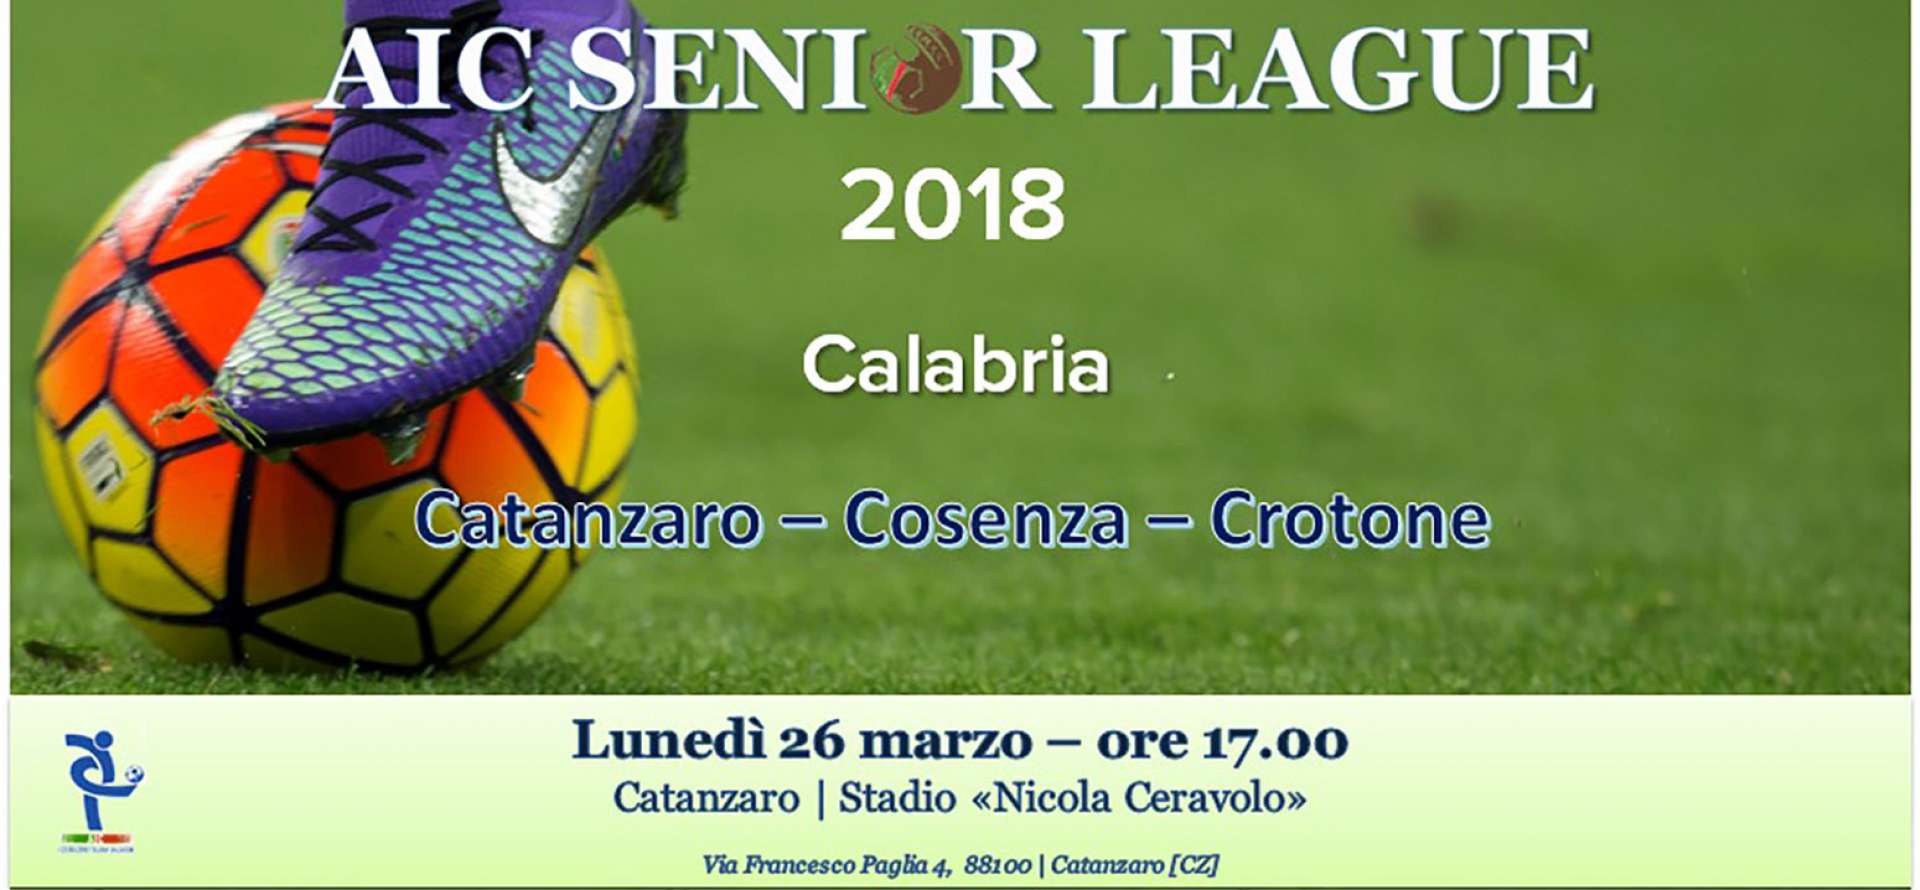 AIC Senior League, AIC, Associazione Italiana Calciatori, Catanzaro